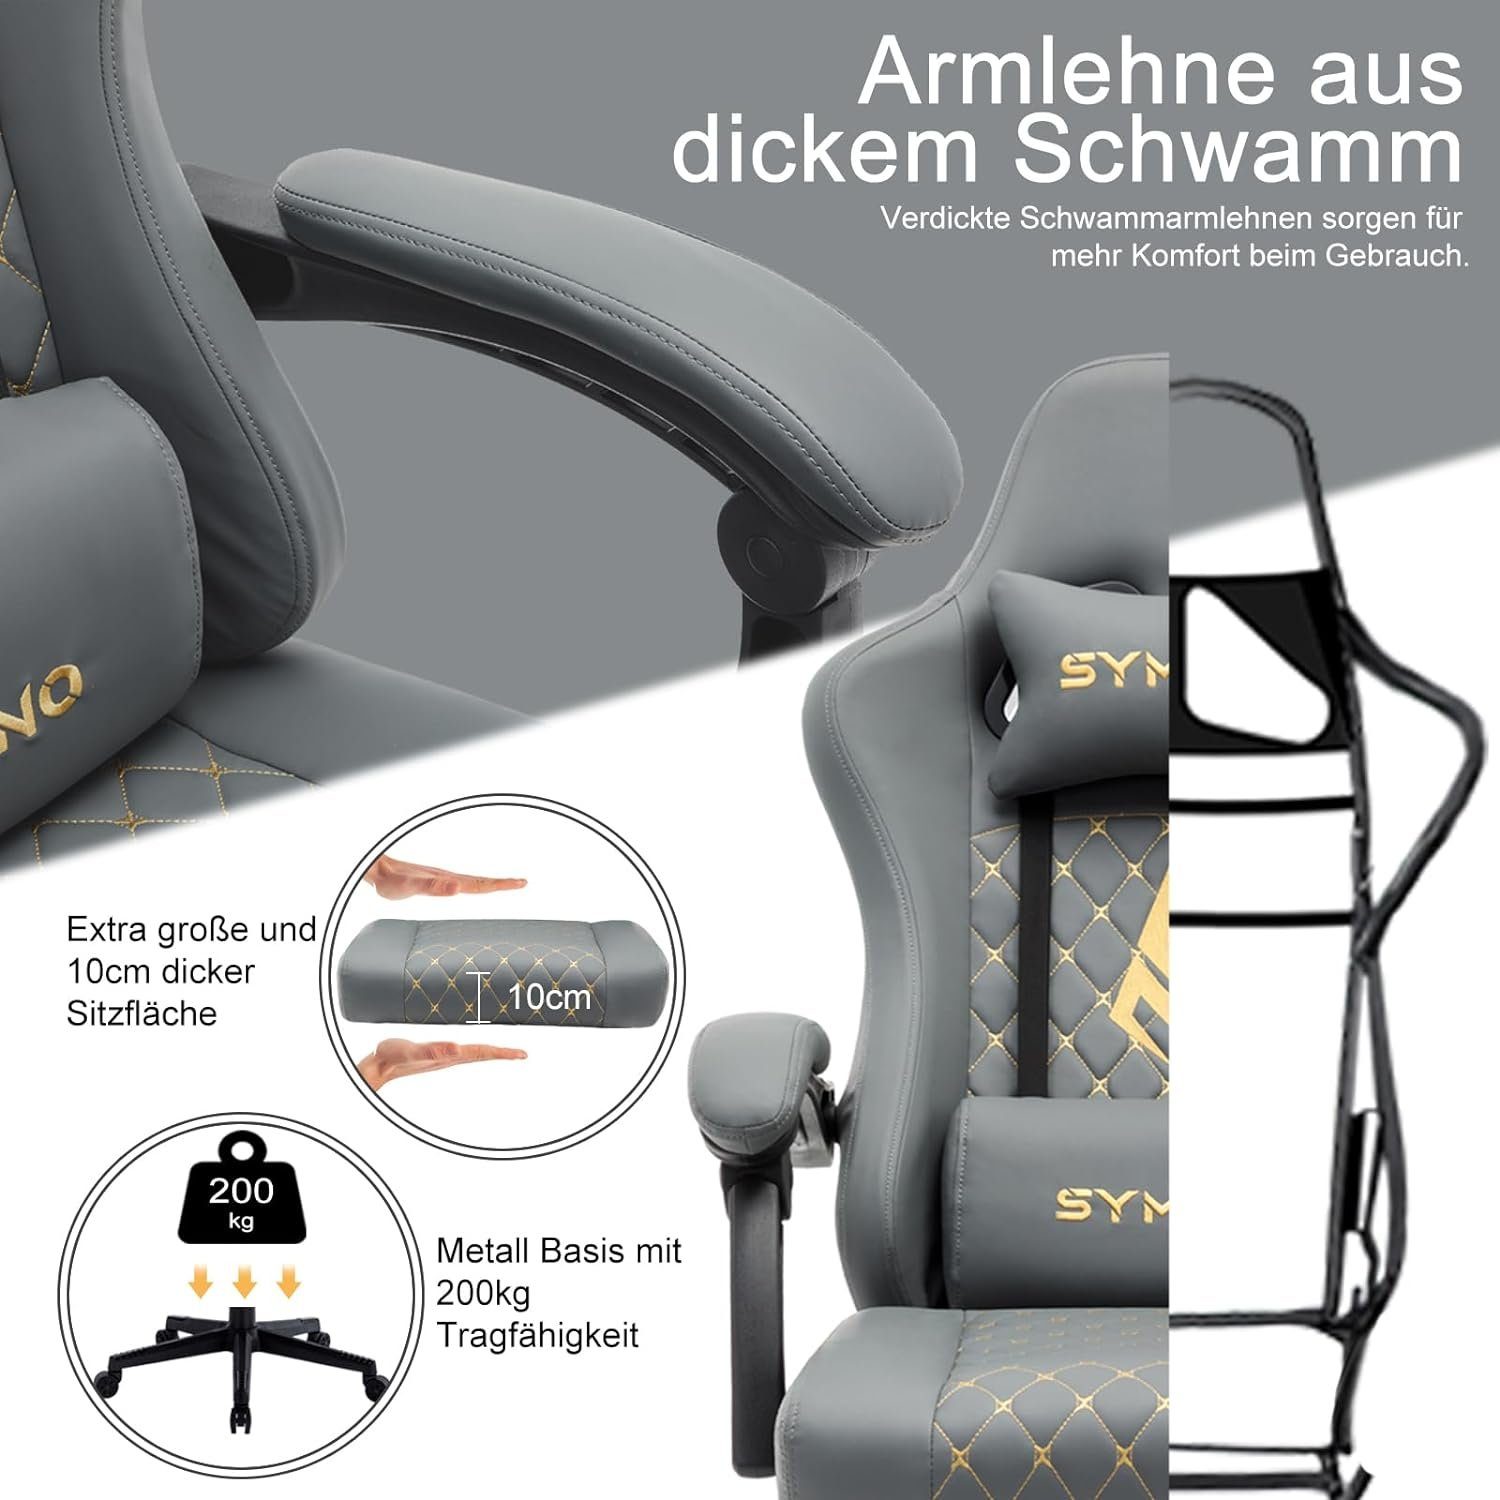 ergonomischer Burostuhl,Schreibtischstuhl Racing gaming Chair fußstütze Gaming Sitz), stuhl mit (Ergonomischer pu-leder bürostuhl Verstellbarer symino stuhl